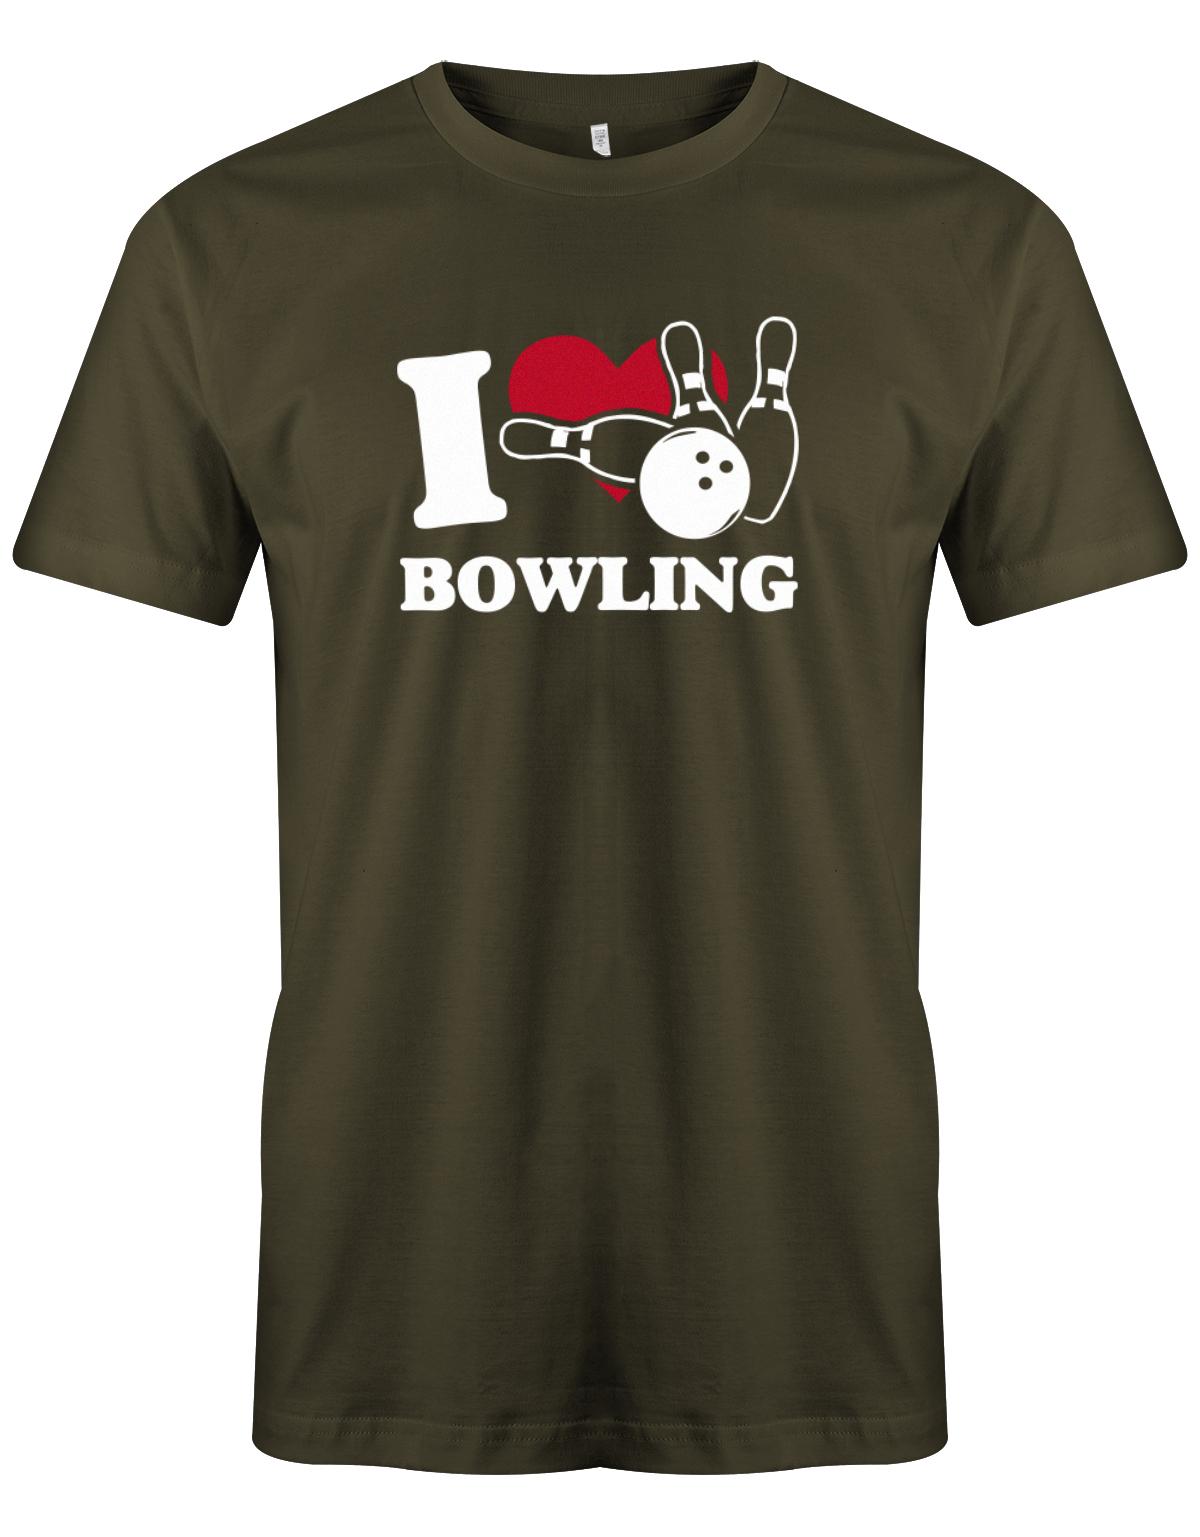 I-LOve-Bowling-Herren-Shirt-Army